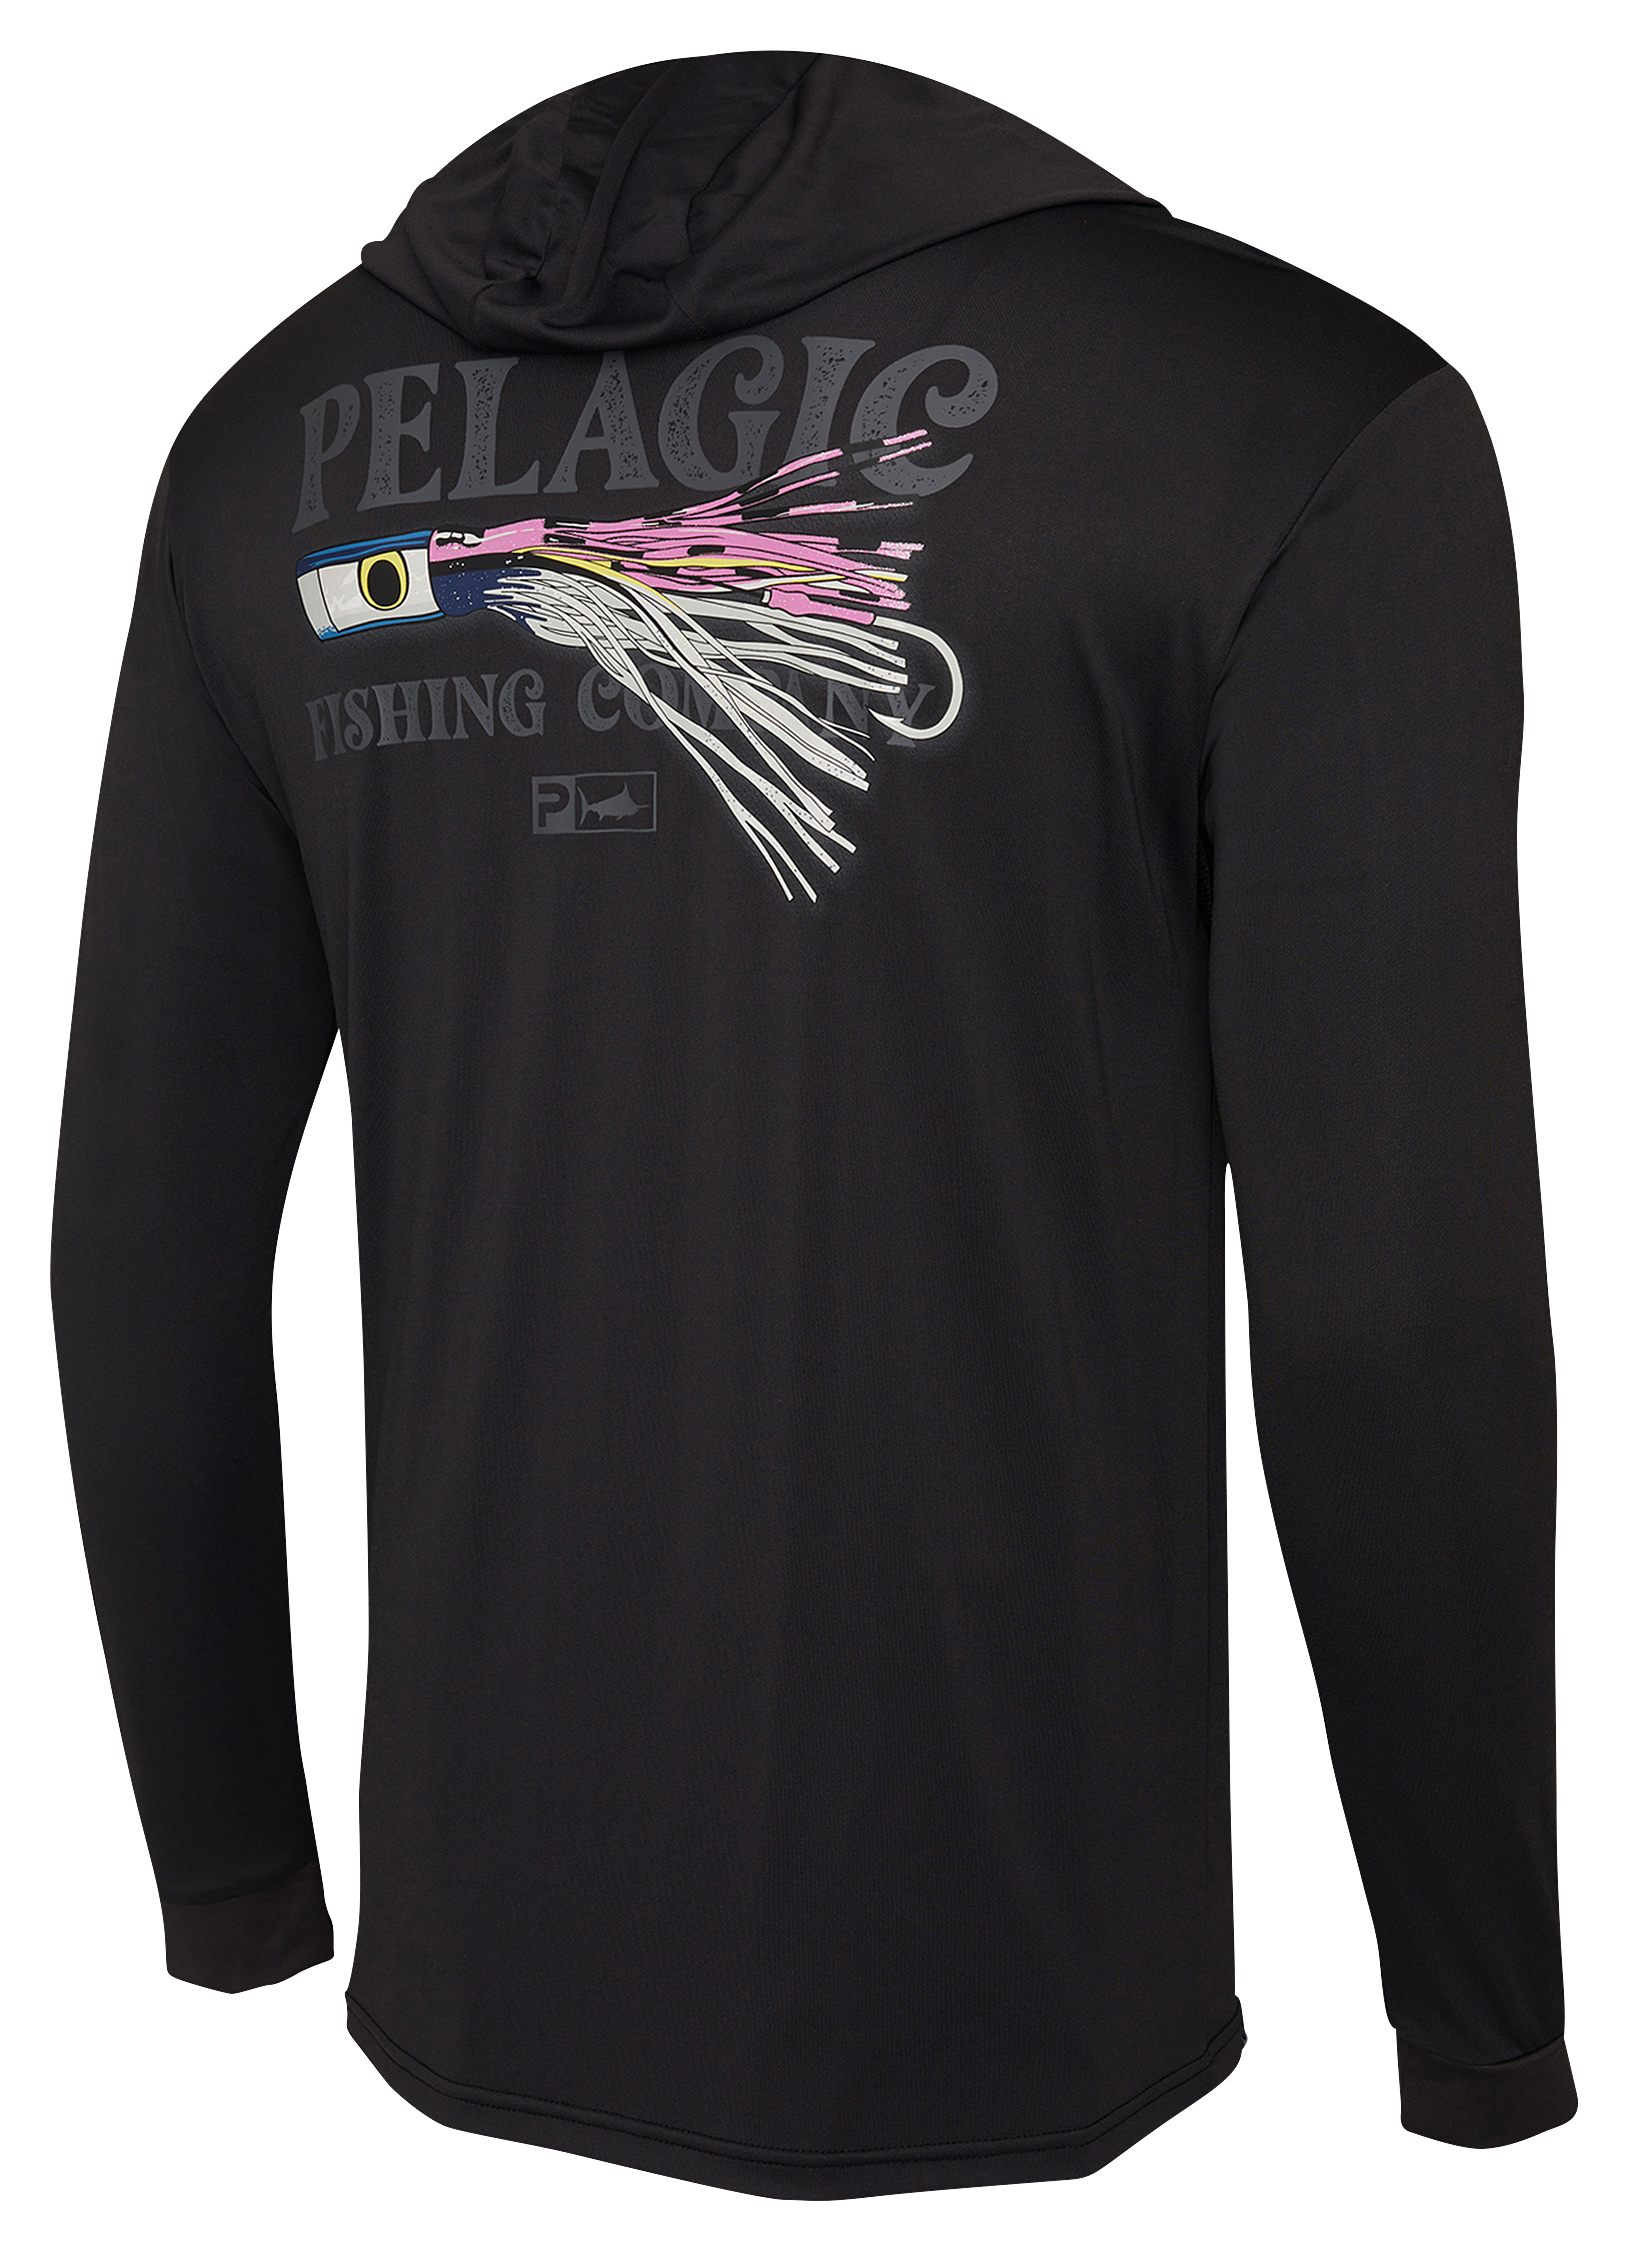 Pelagic Aquatek Lured Hooded Long-Sleeve Shirt for Men - Black/Lured - 2XL